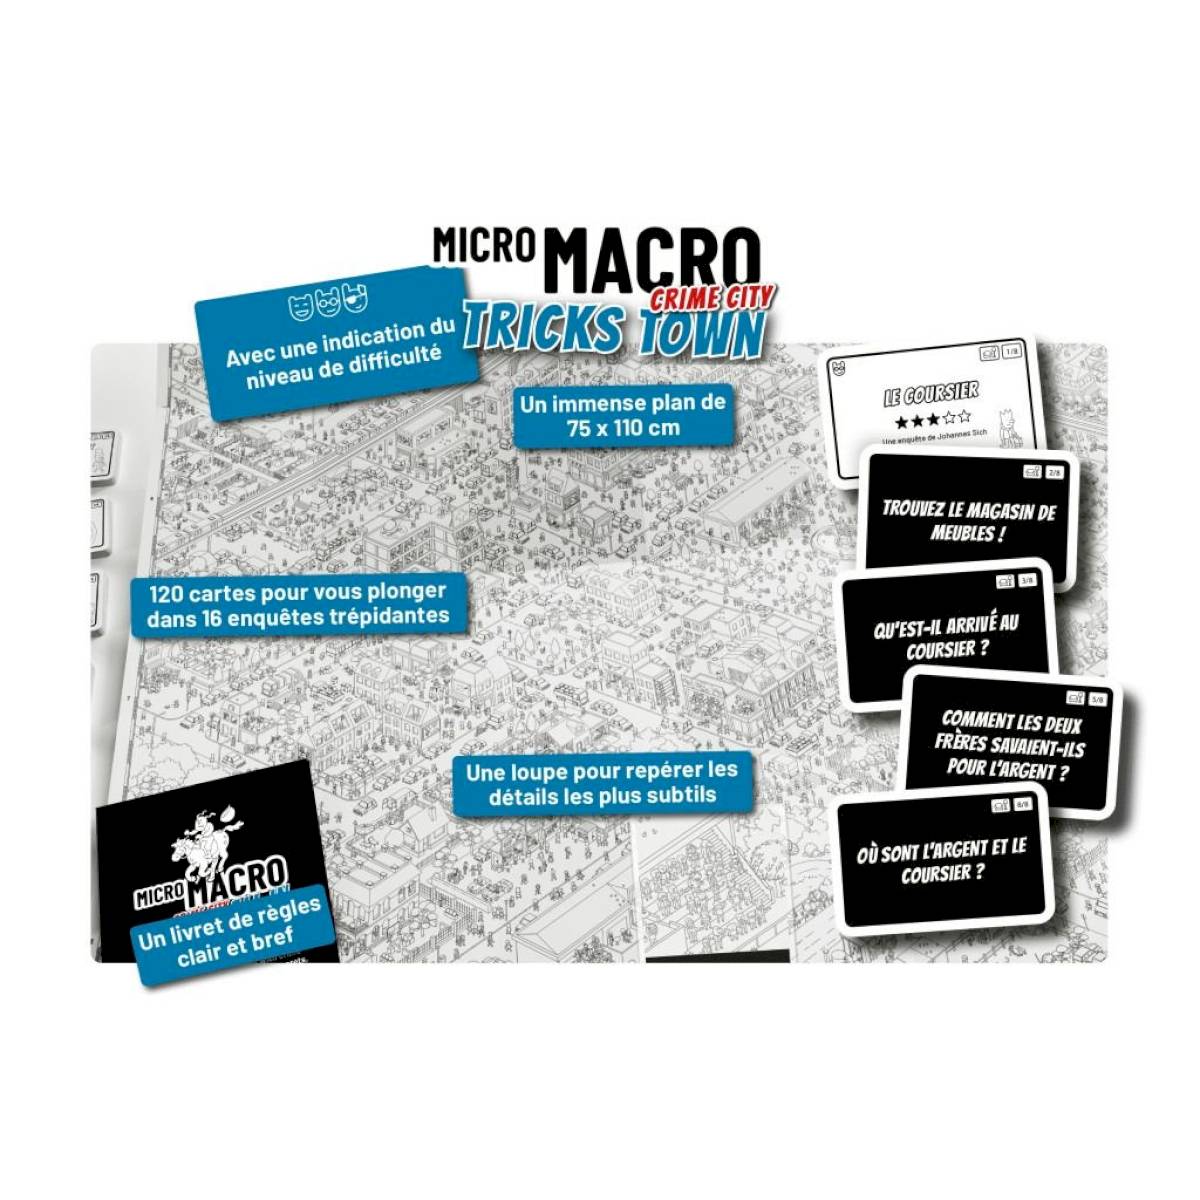 Micro Macro crime city Tricks Town